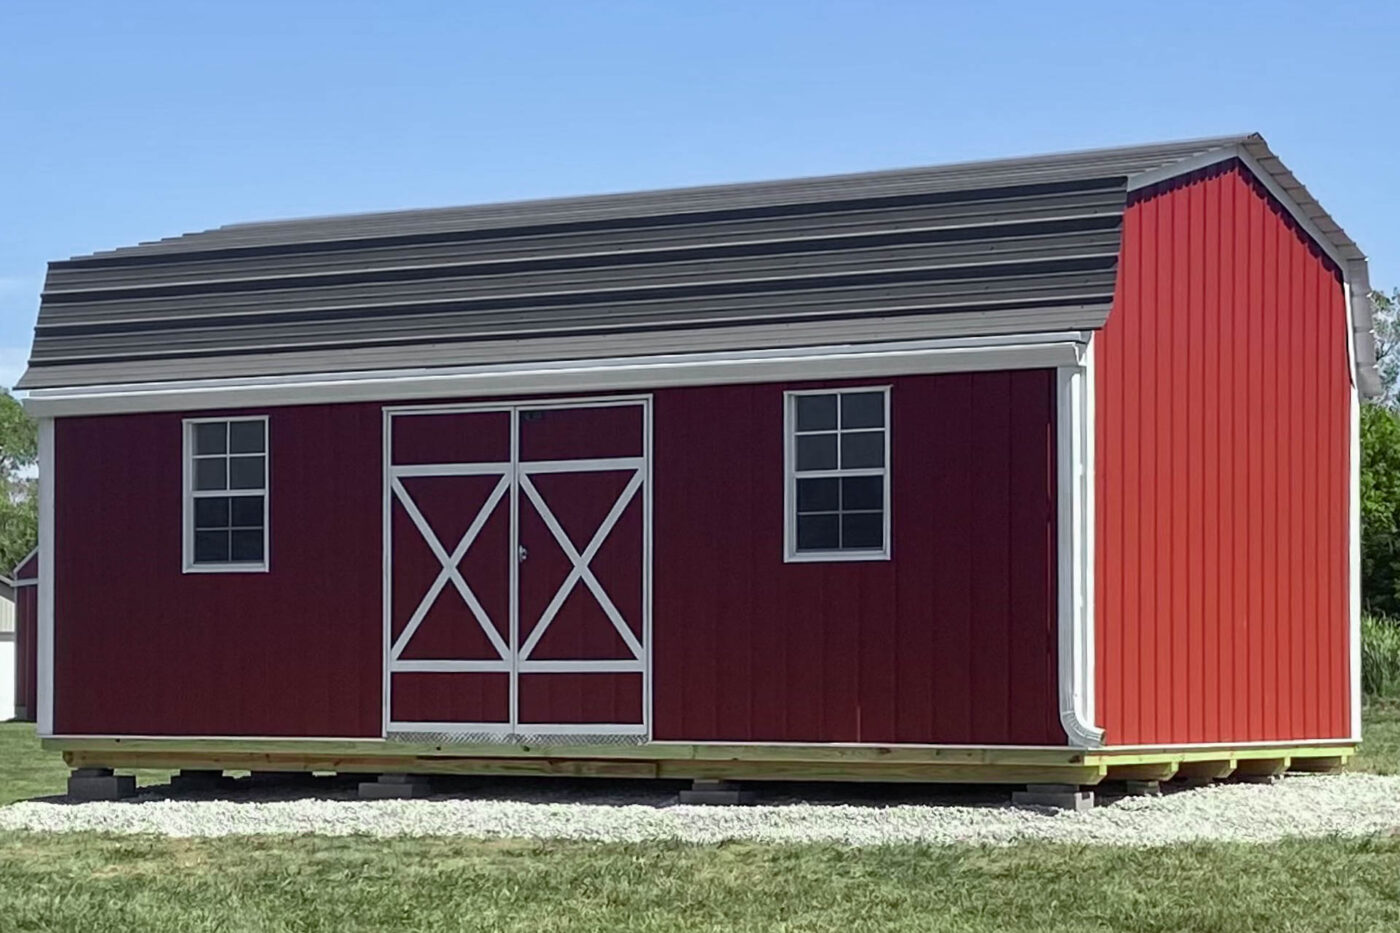 highwall lofted barn built by Premier Barns in Missouri